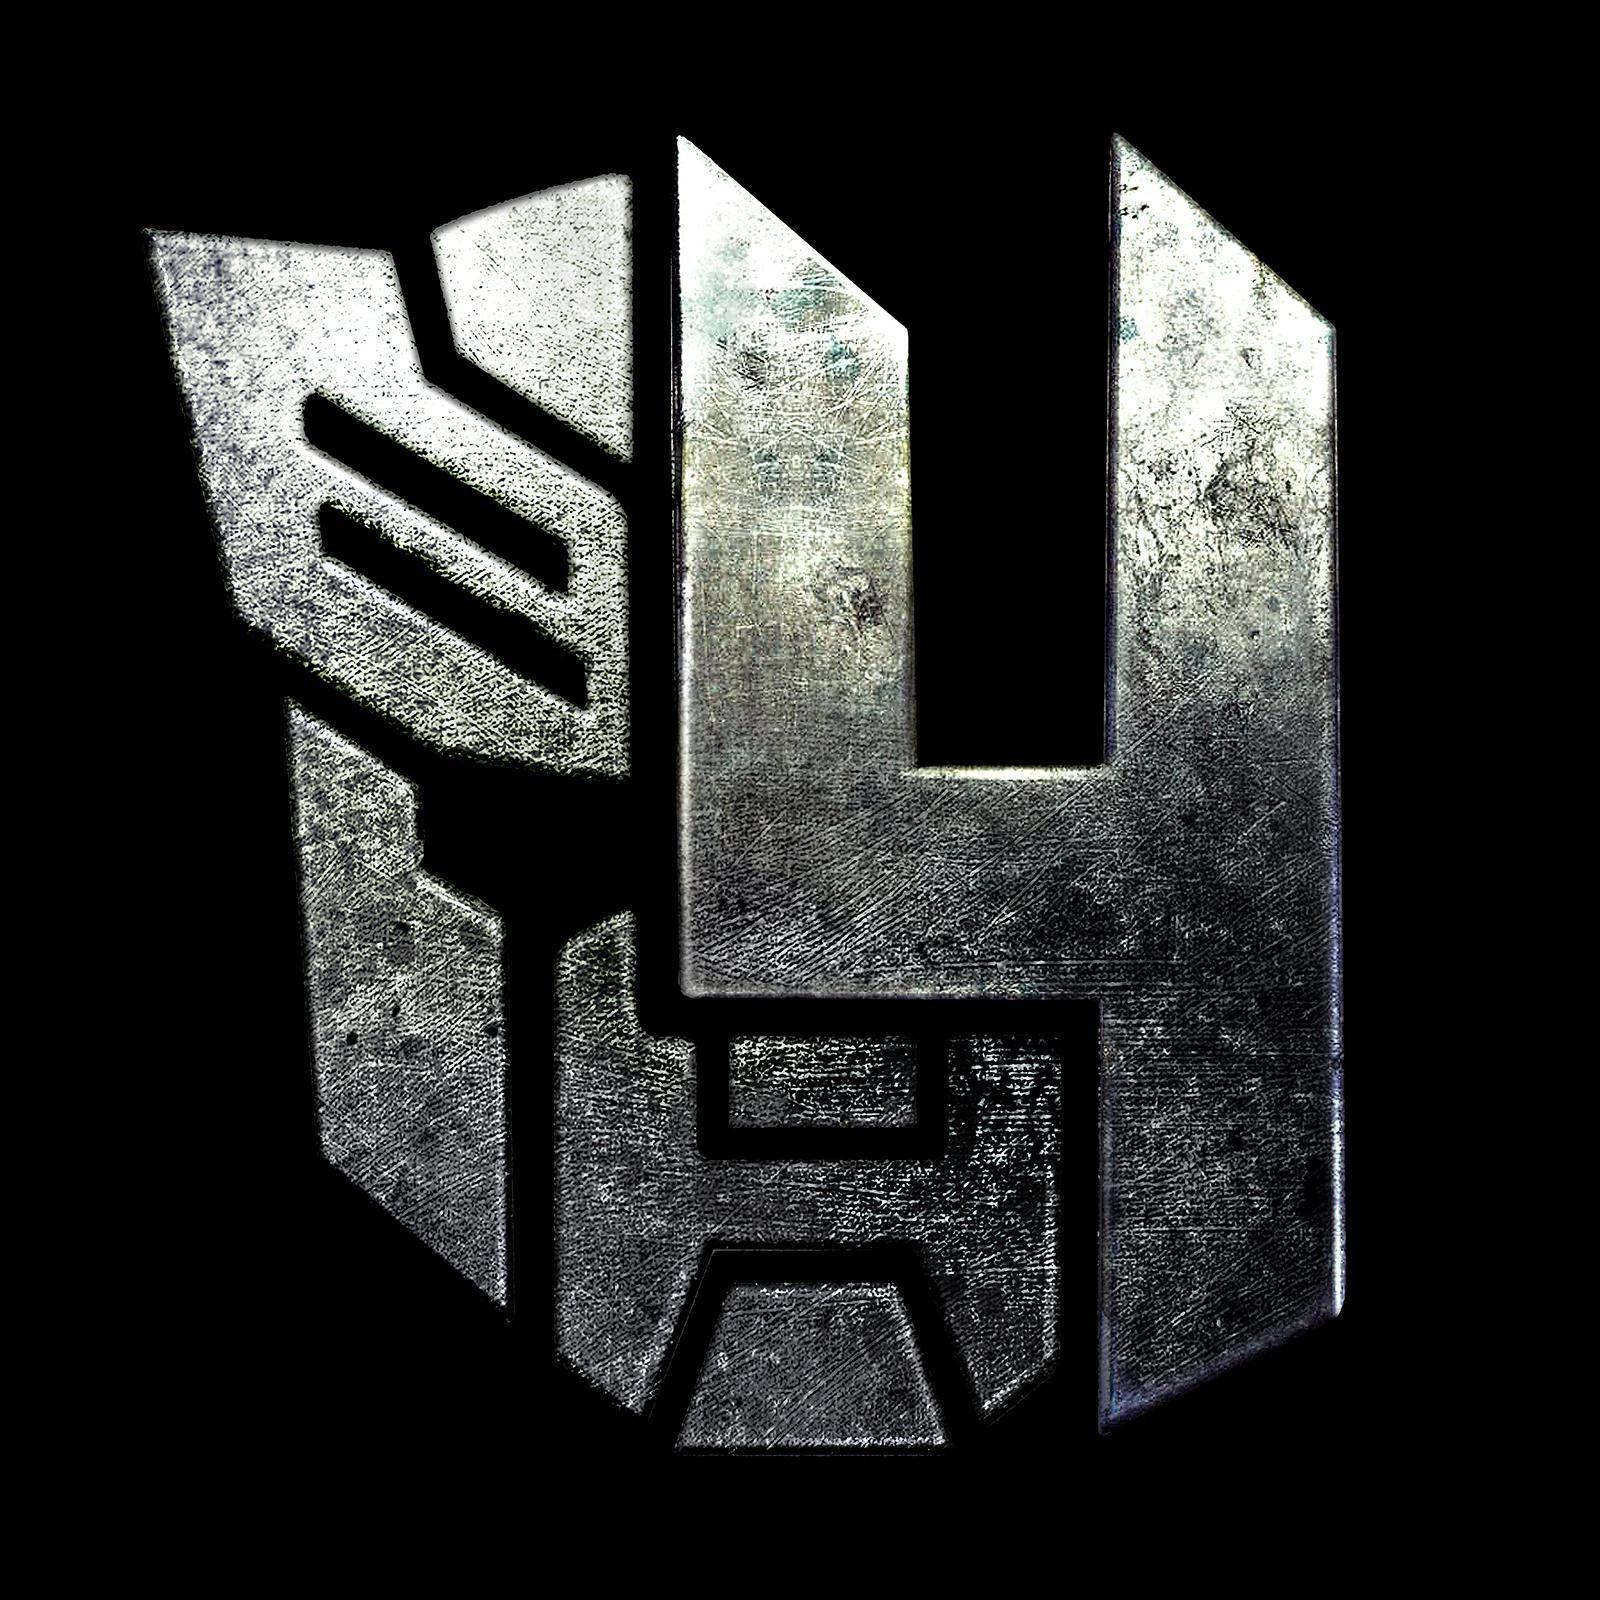 Transformers 4 Logo - Transformers 4 Bits. Shotz Taken Media